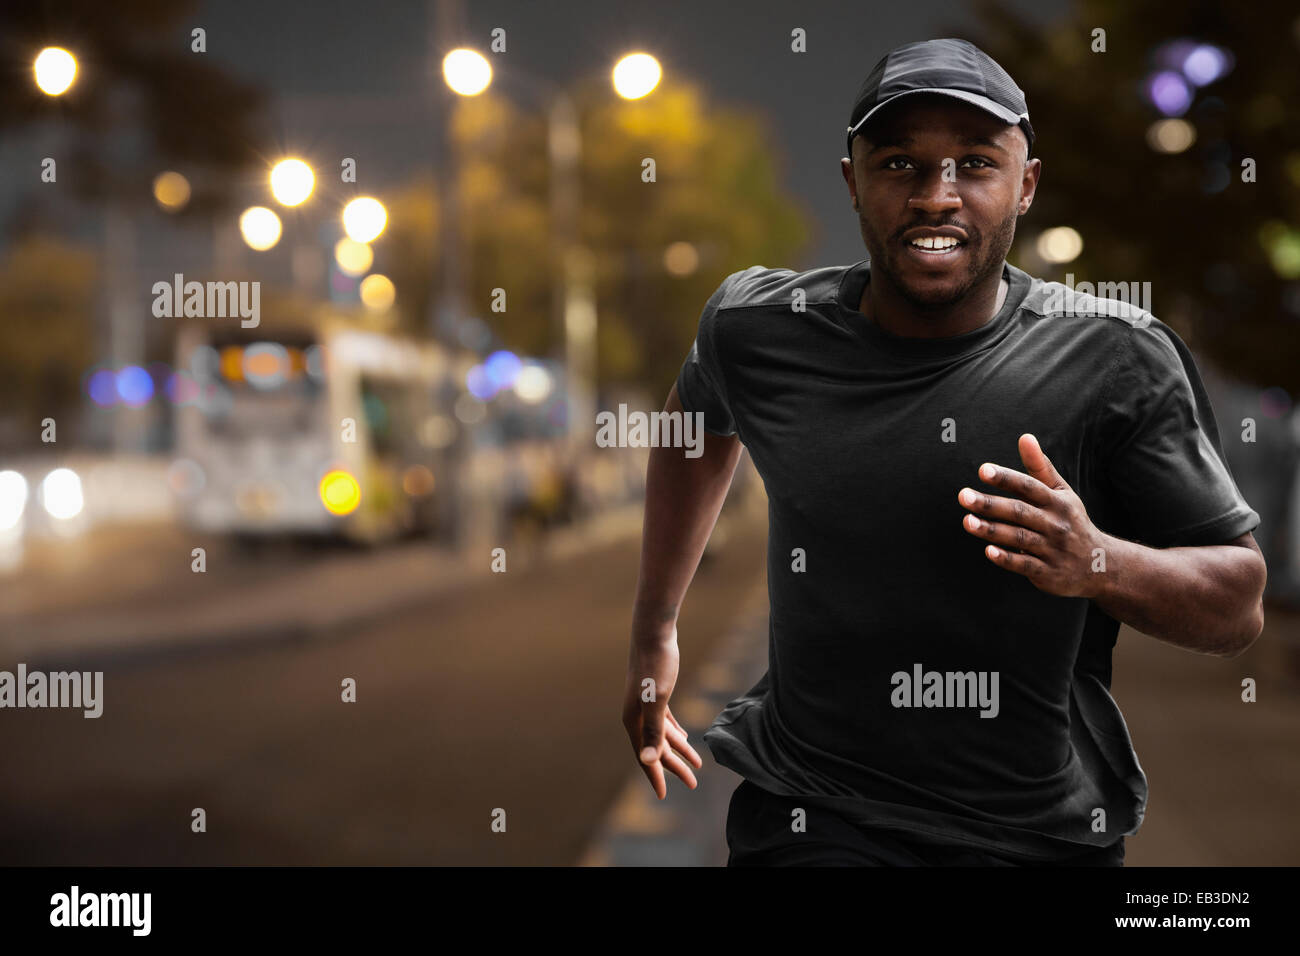 Black man running on city street at night Stock Photo